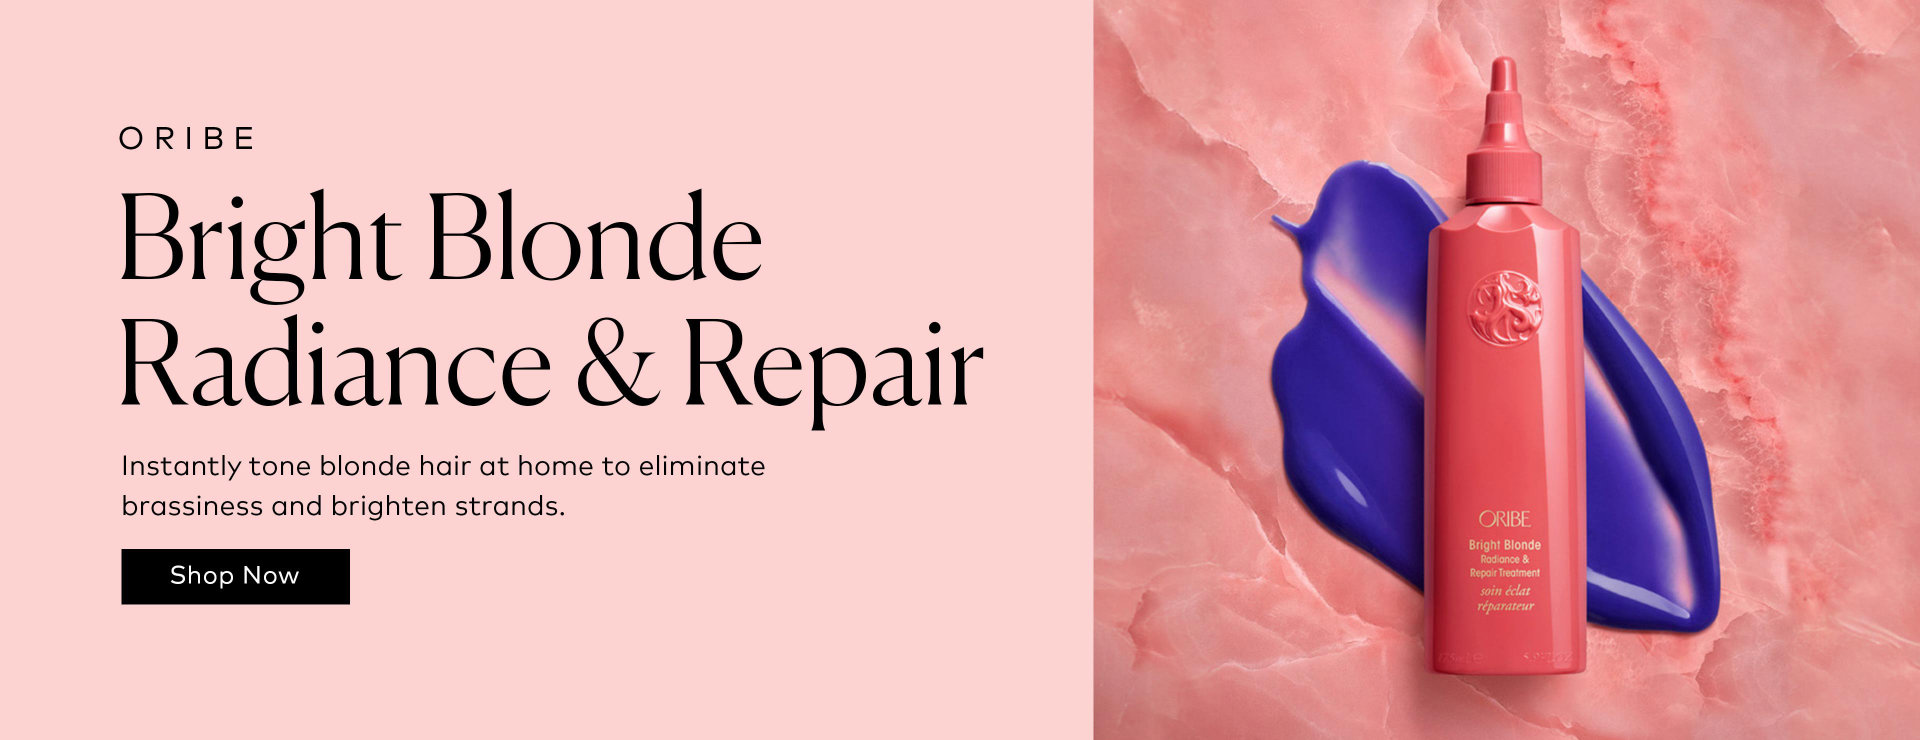 Shop the Oribe Bright Blonde Radiance & Repair Treatment at Beautylish.com